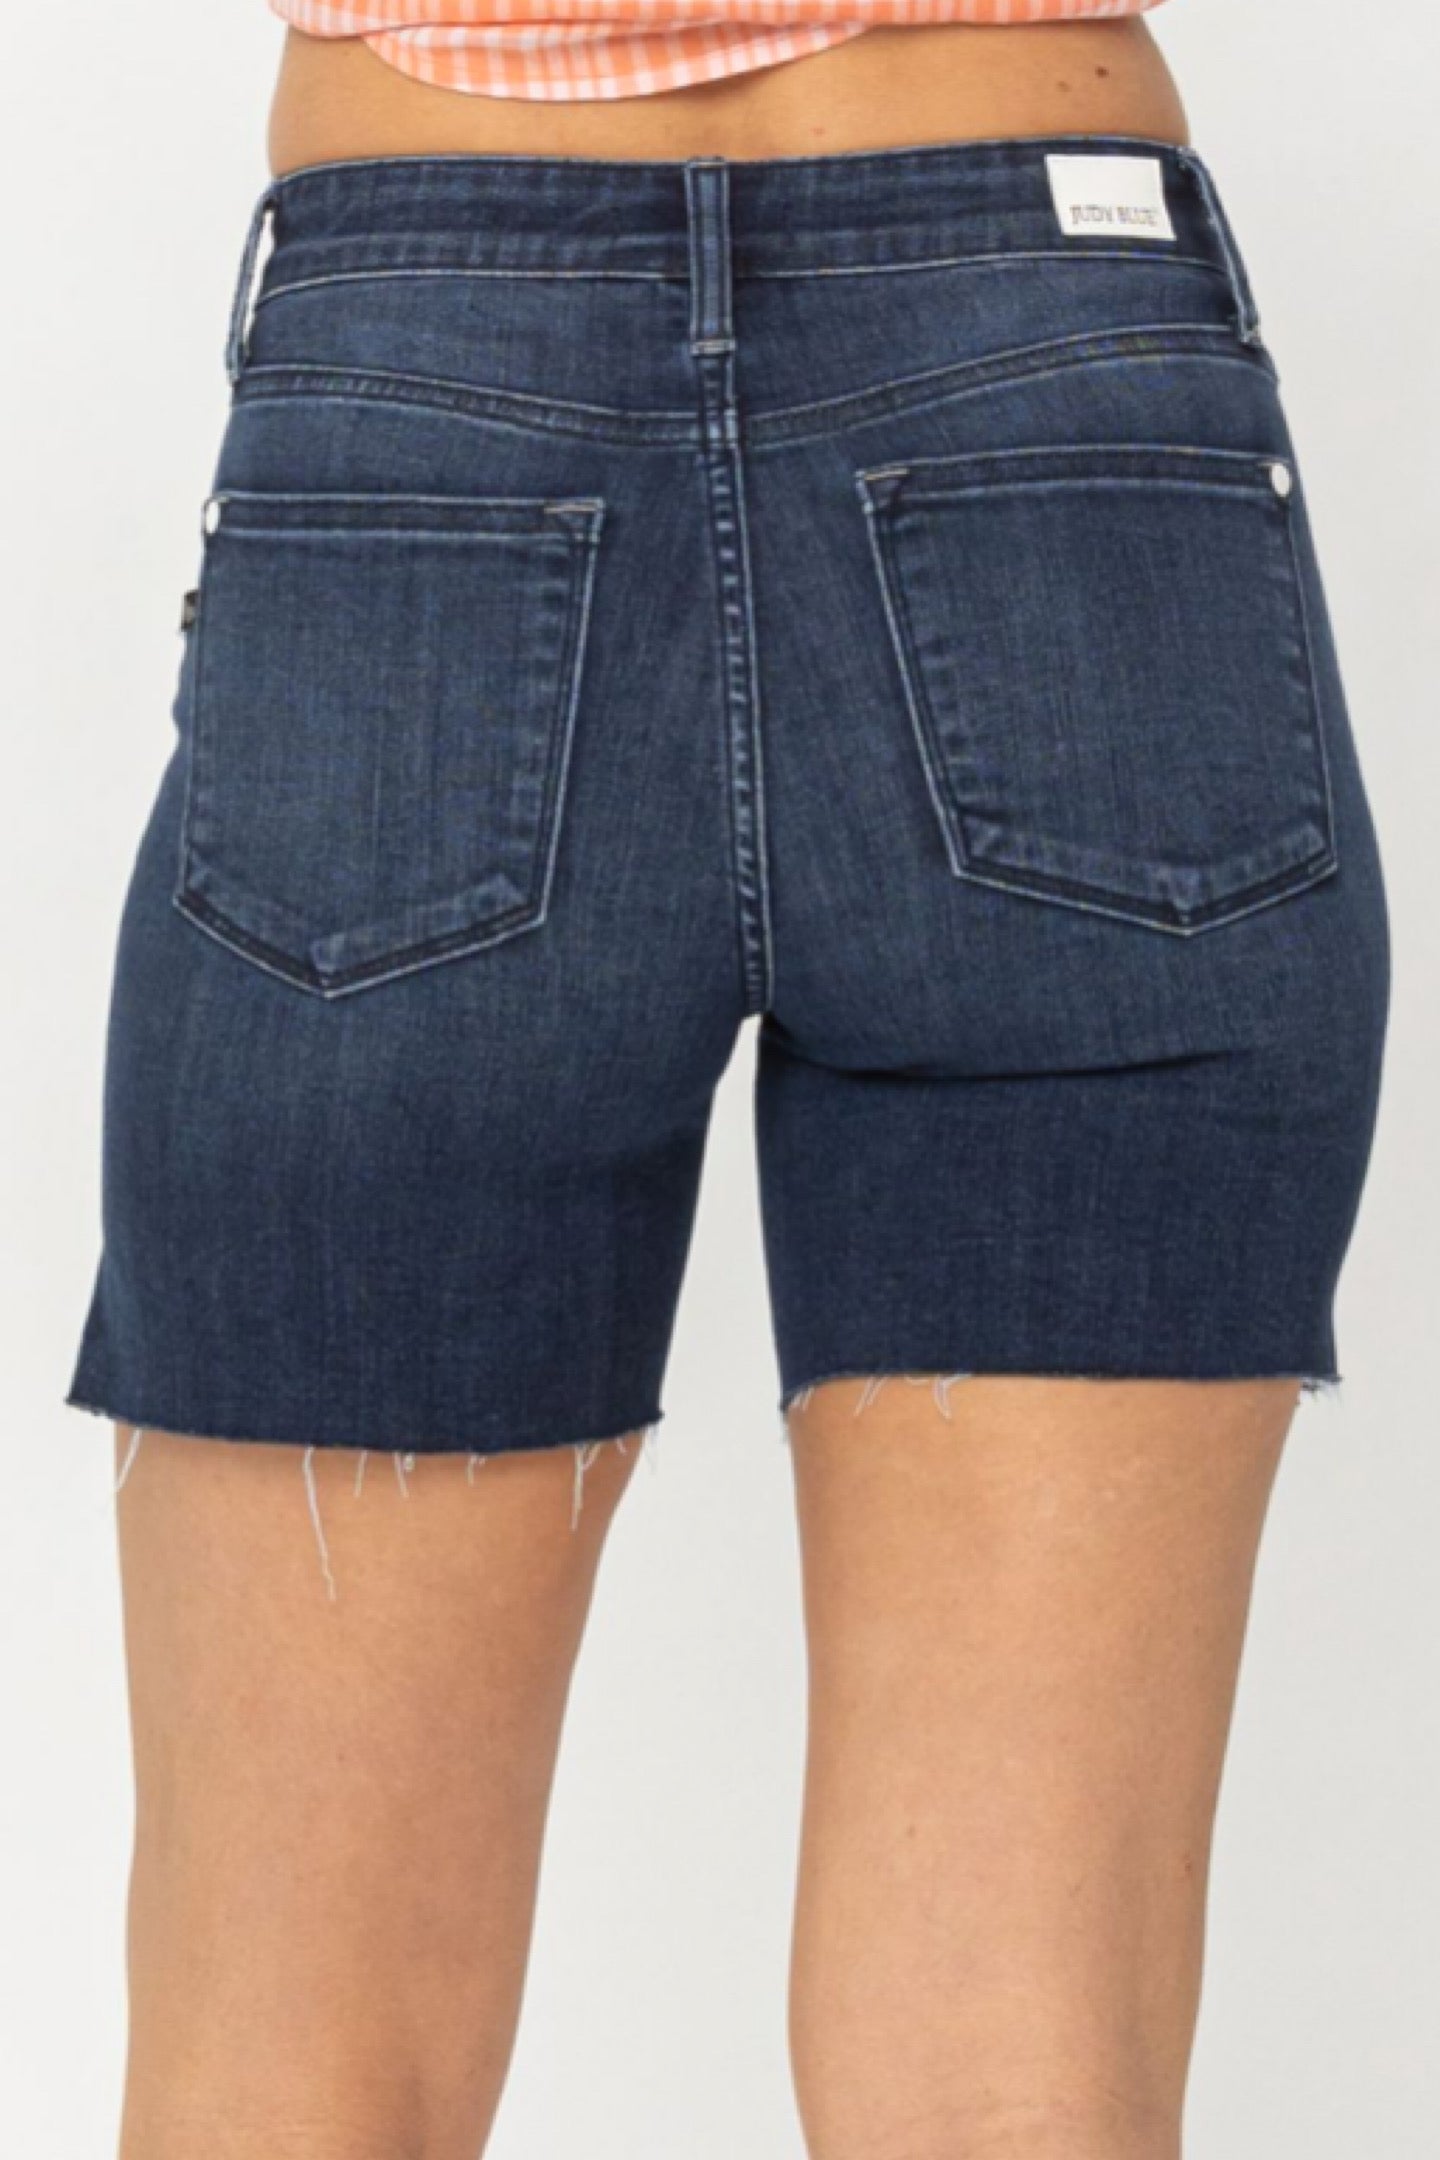 Judy Blue Mid Length Cut Off Shorts